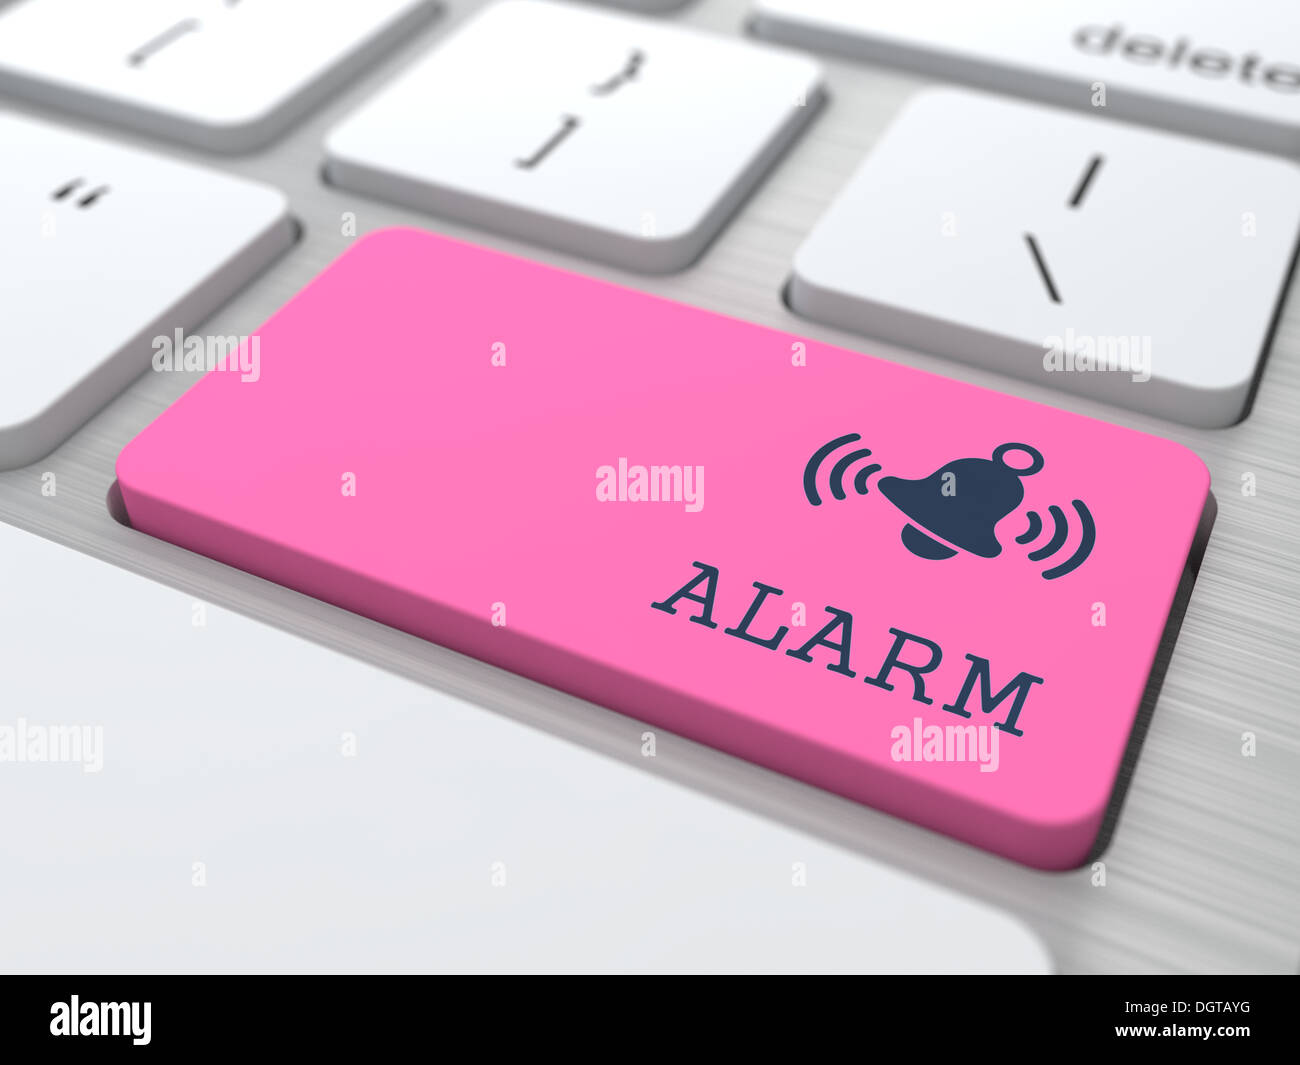 Security-Konzept - die rote Alarm-Taste. Stockfoto